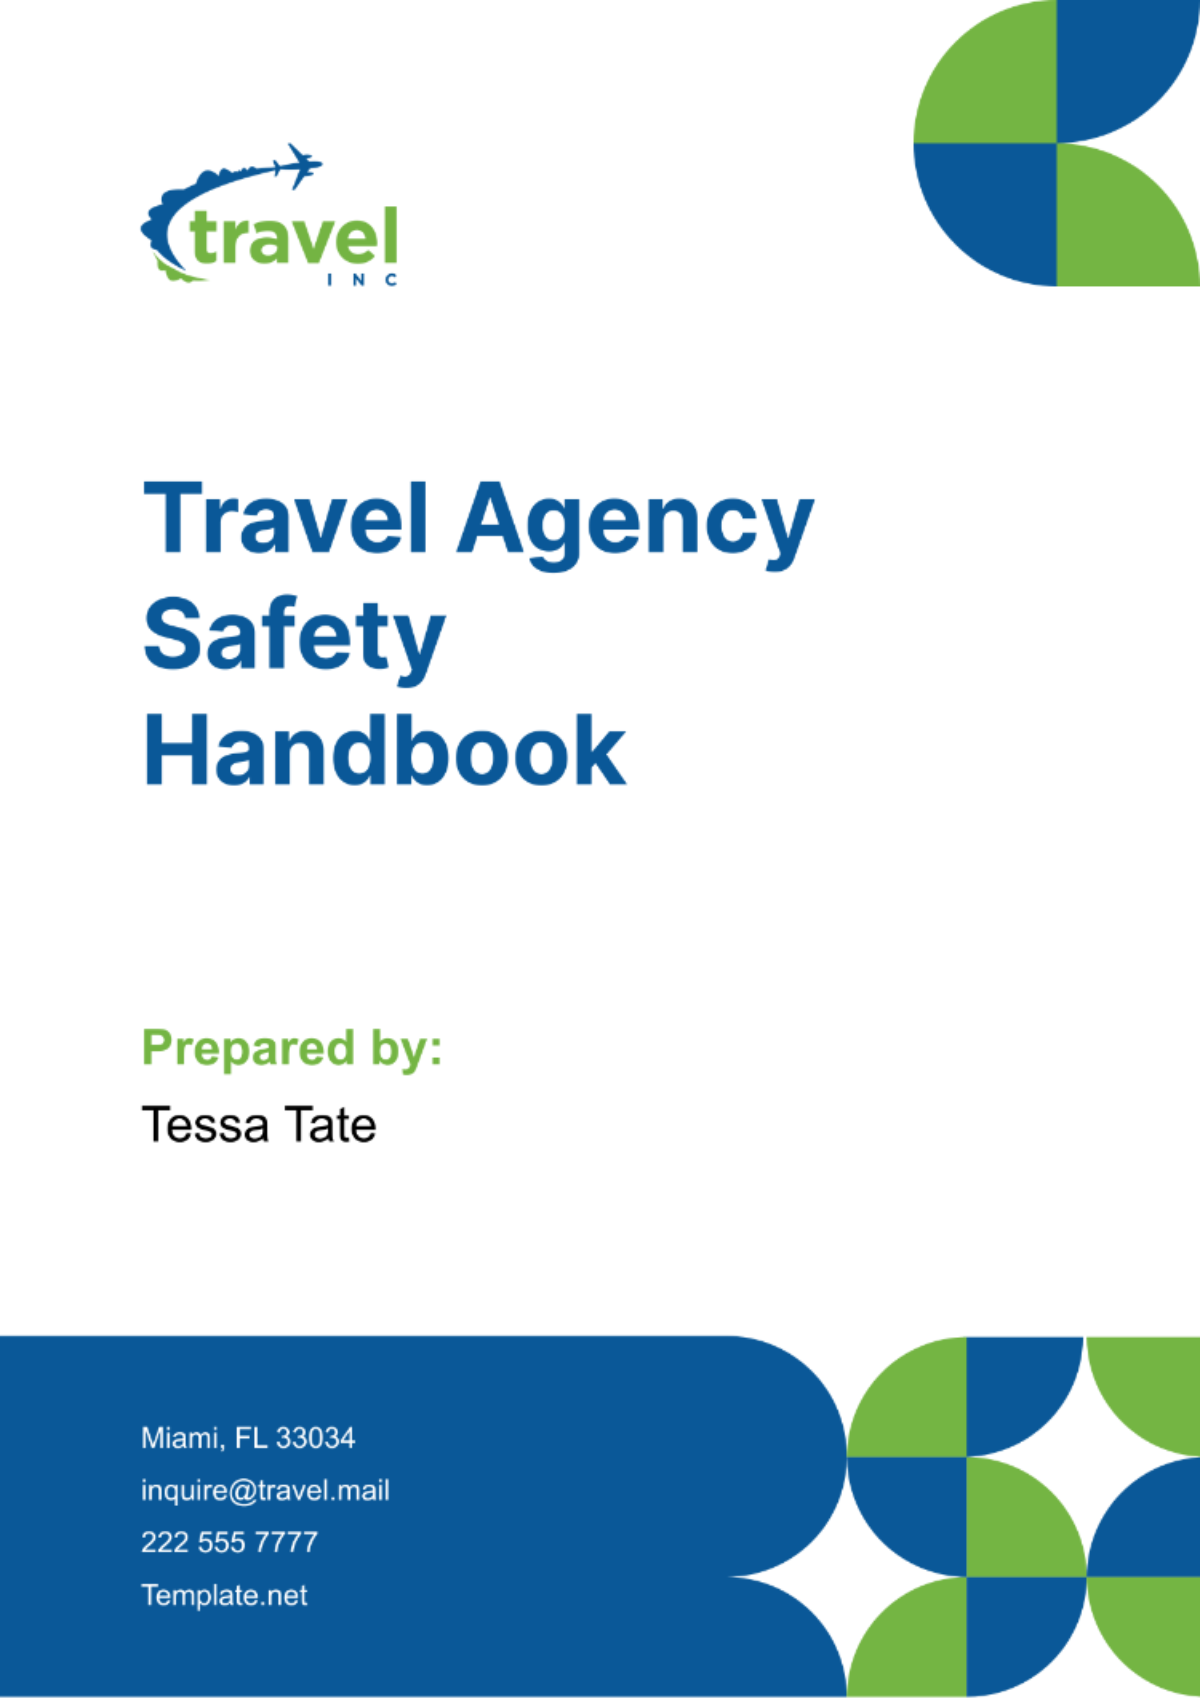 Travel Agency Safety Handbook Template